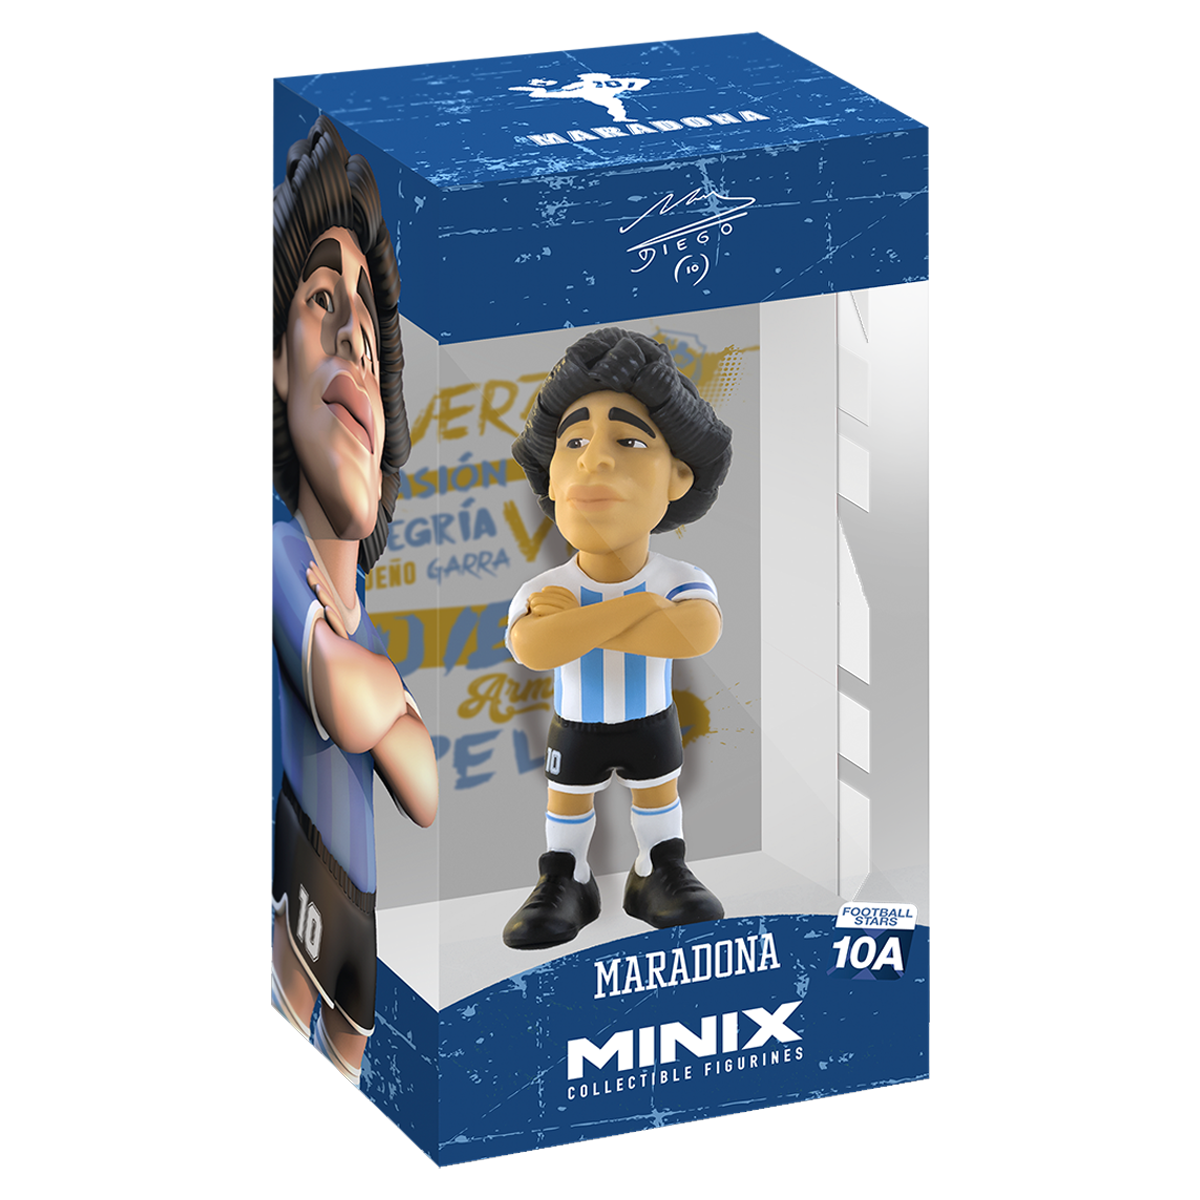 Minix collectible figurines - maradona argentina - 